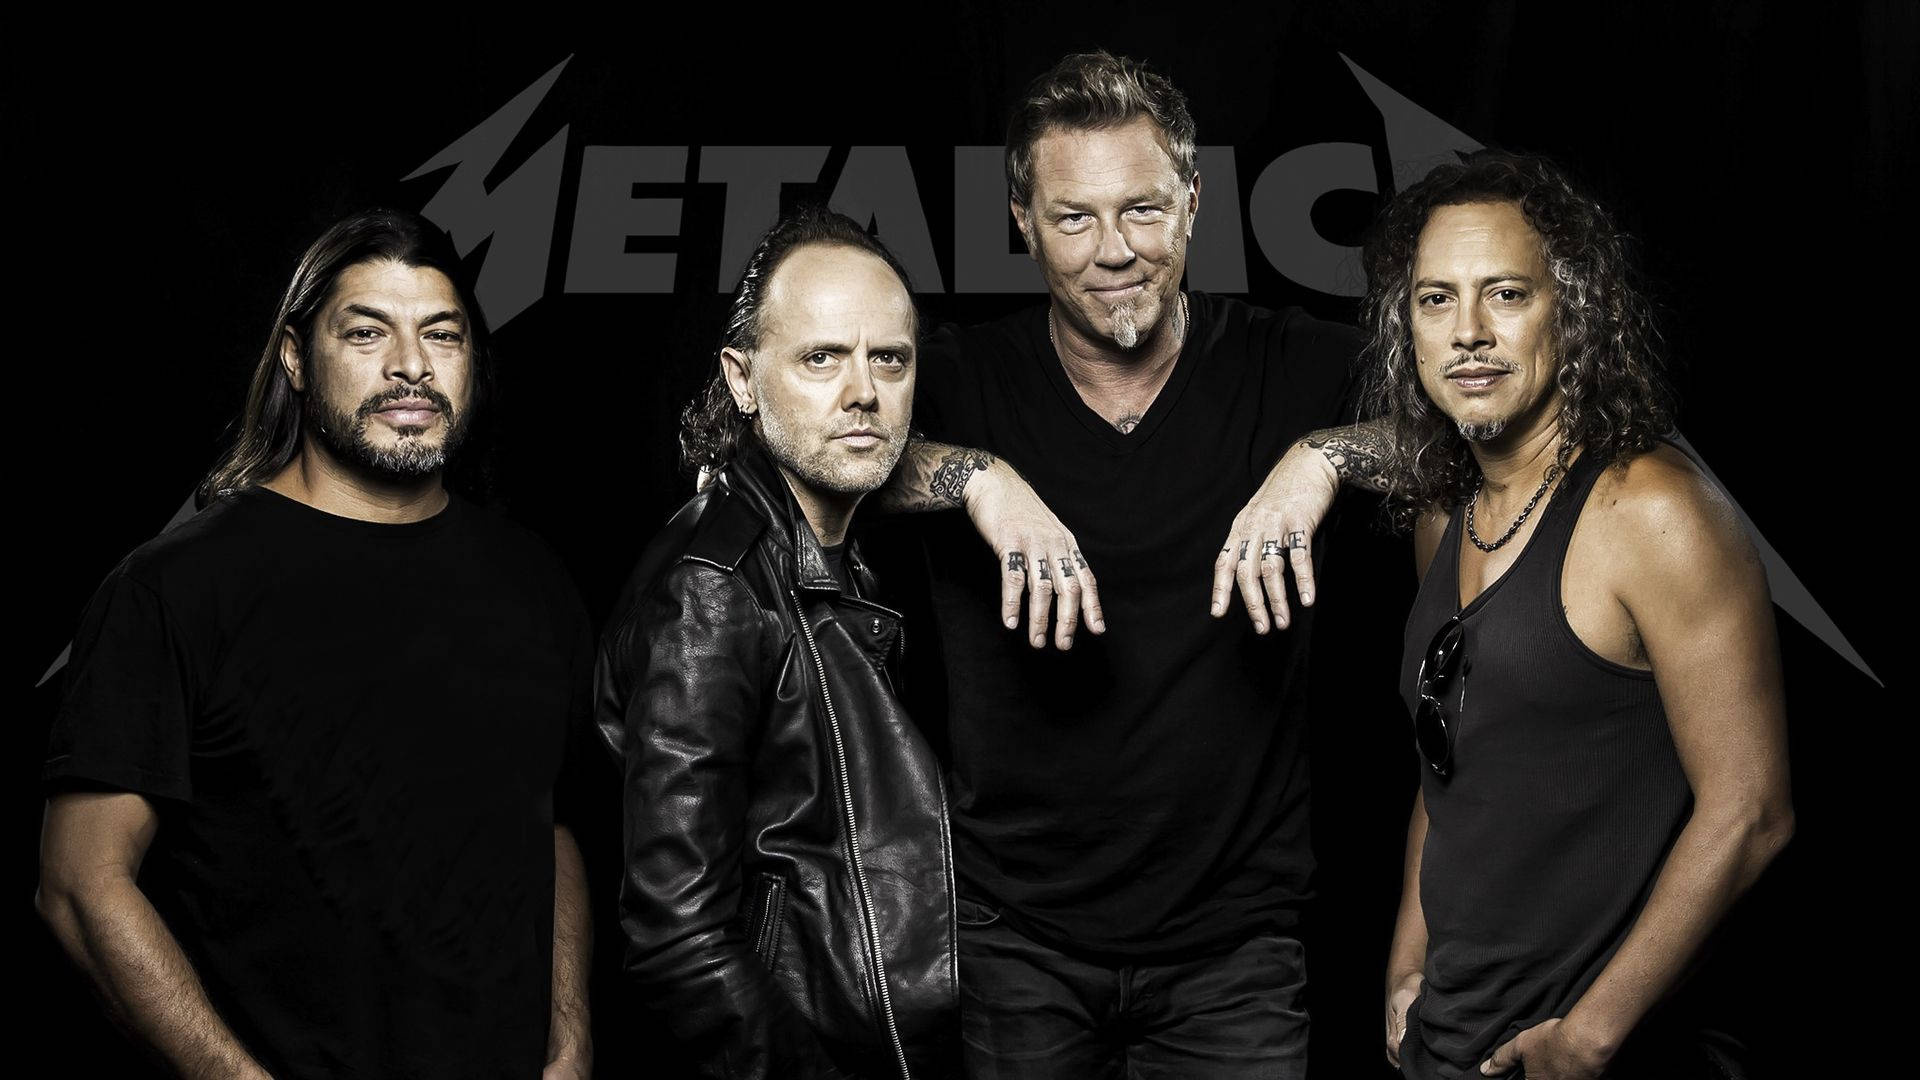 Download Metallica, Band members wallpaper, Rock legends, Heavy metal icons, 1920x1080 Full HD Desktop